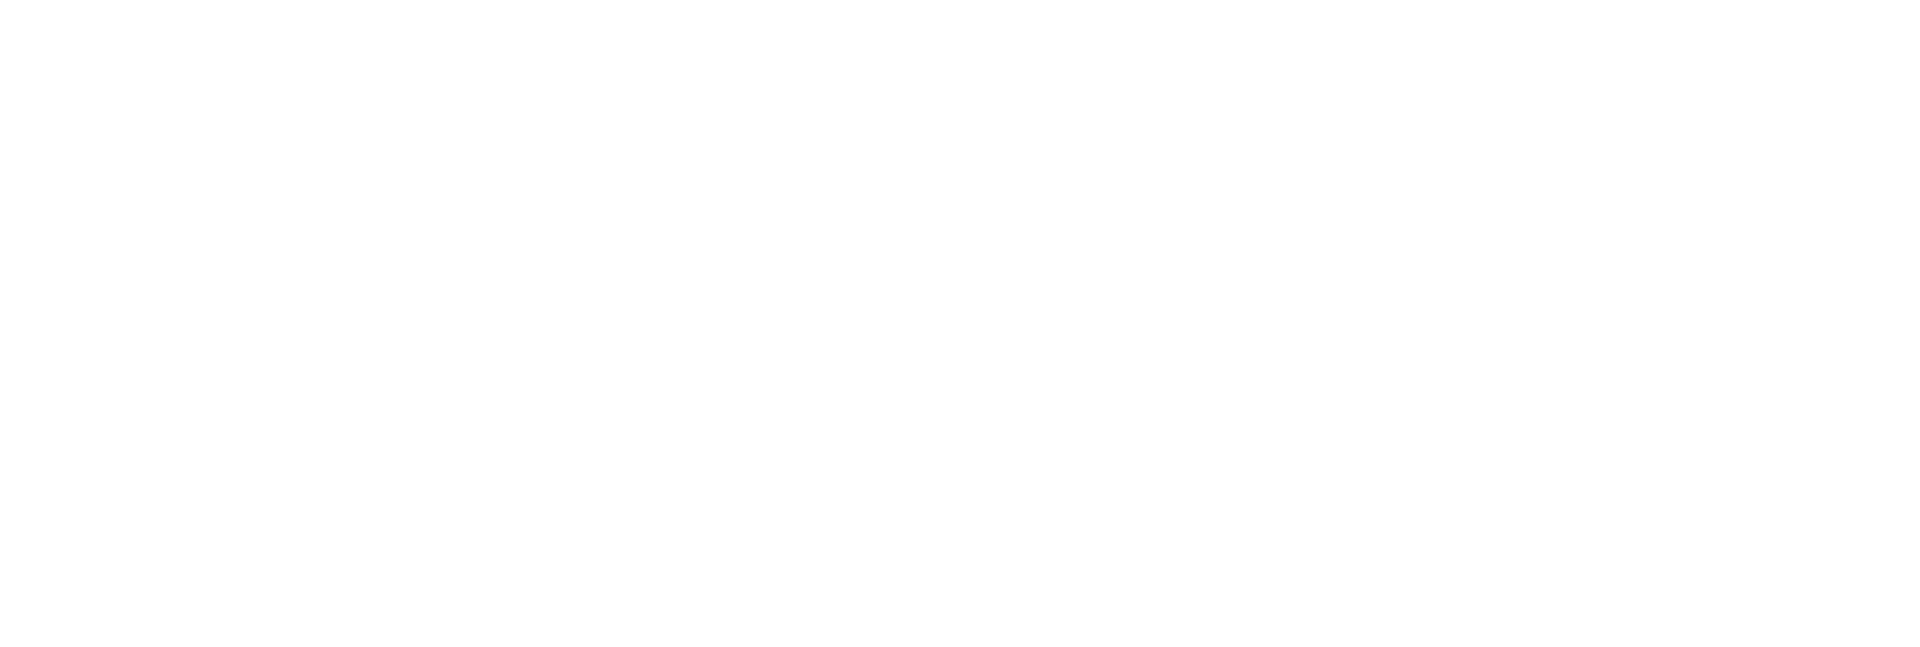 Generational Wealth Team